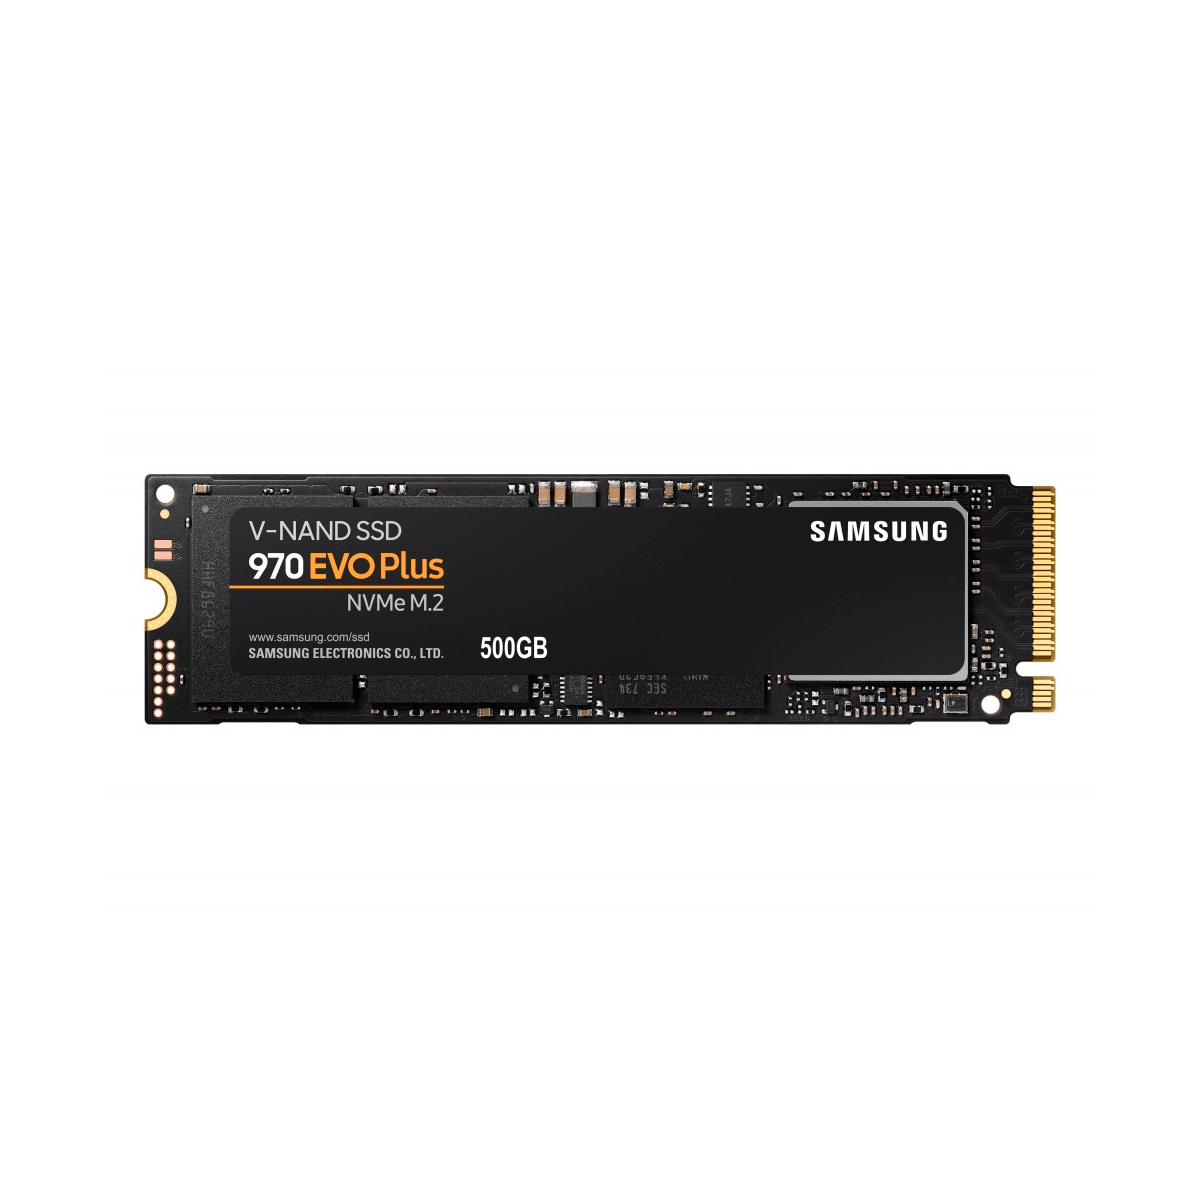 Samsung SSD 970 EVO Plus NVMe, 500GB, M.2, PCI Express 3.0 - GG GAMER STORE